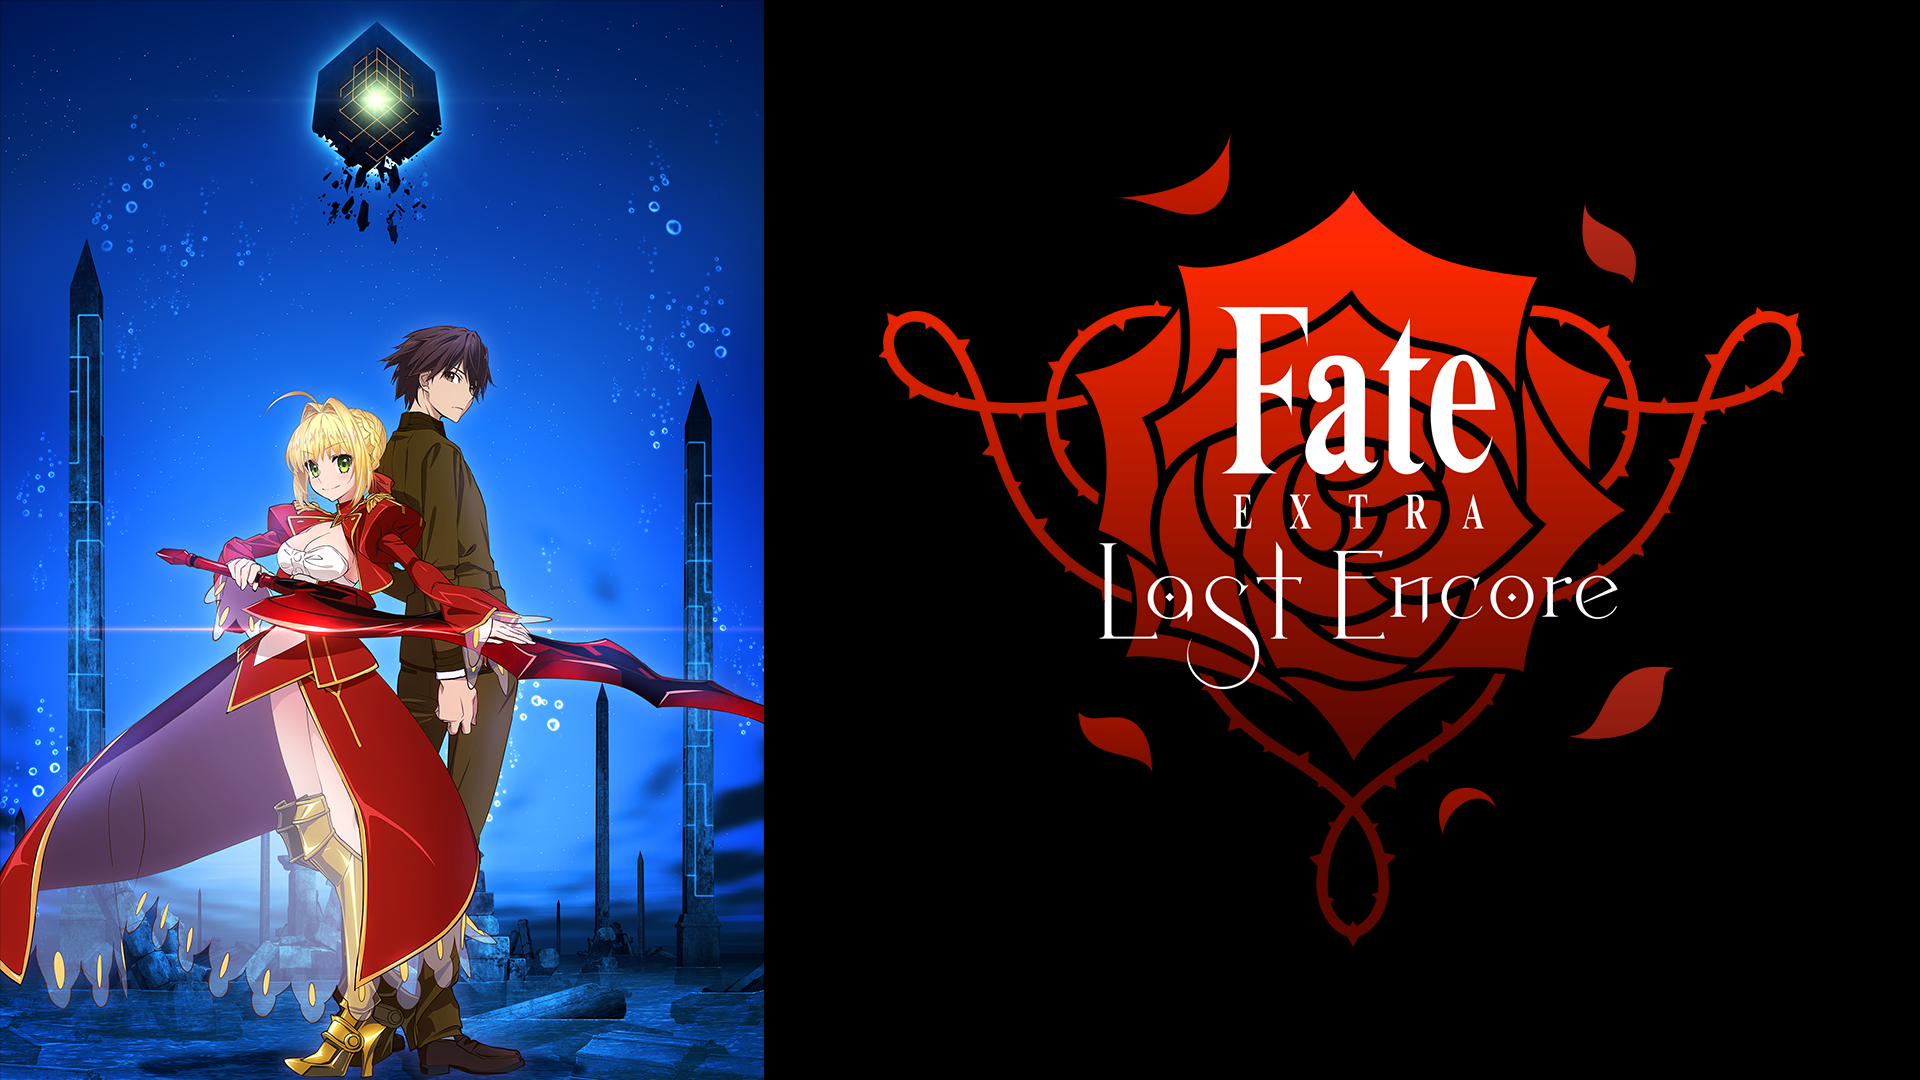 Fate/EXTRA Last Encore イルステリアス天動説